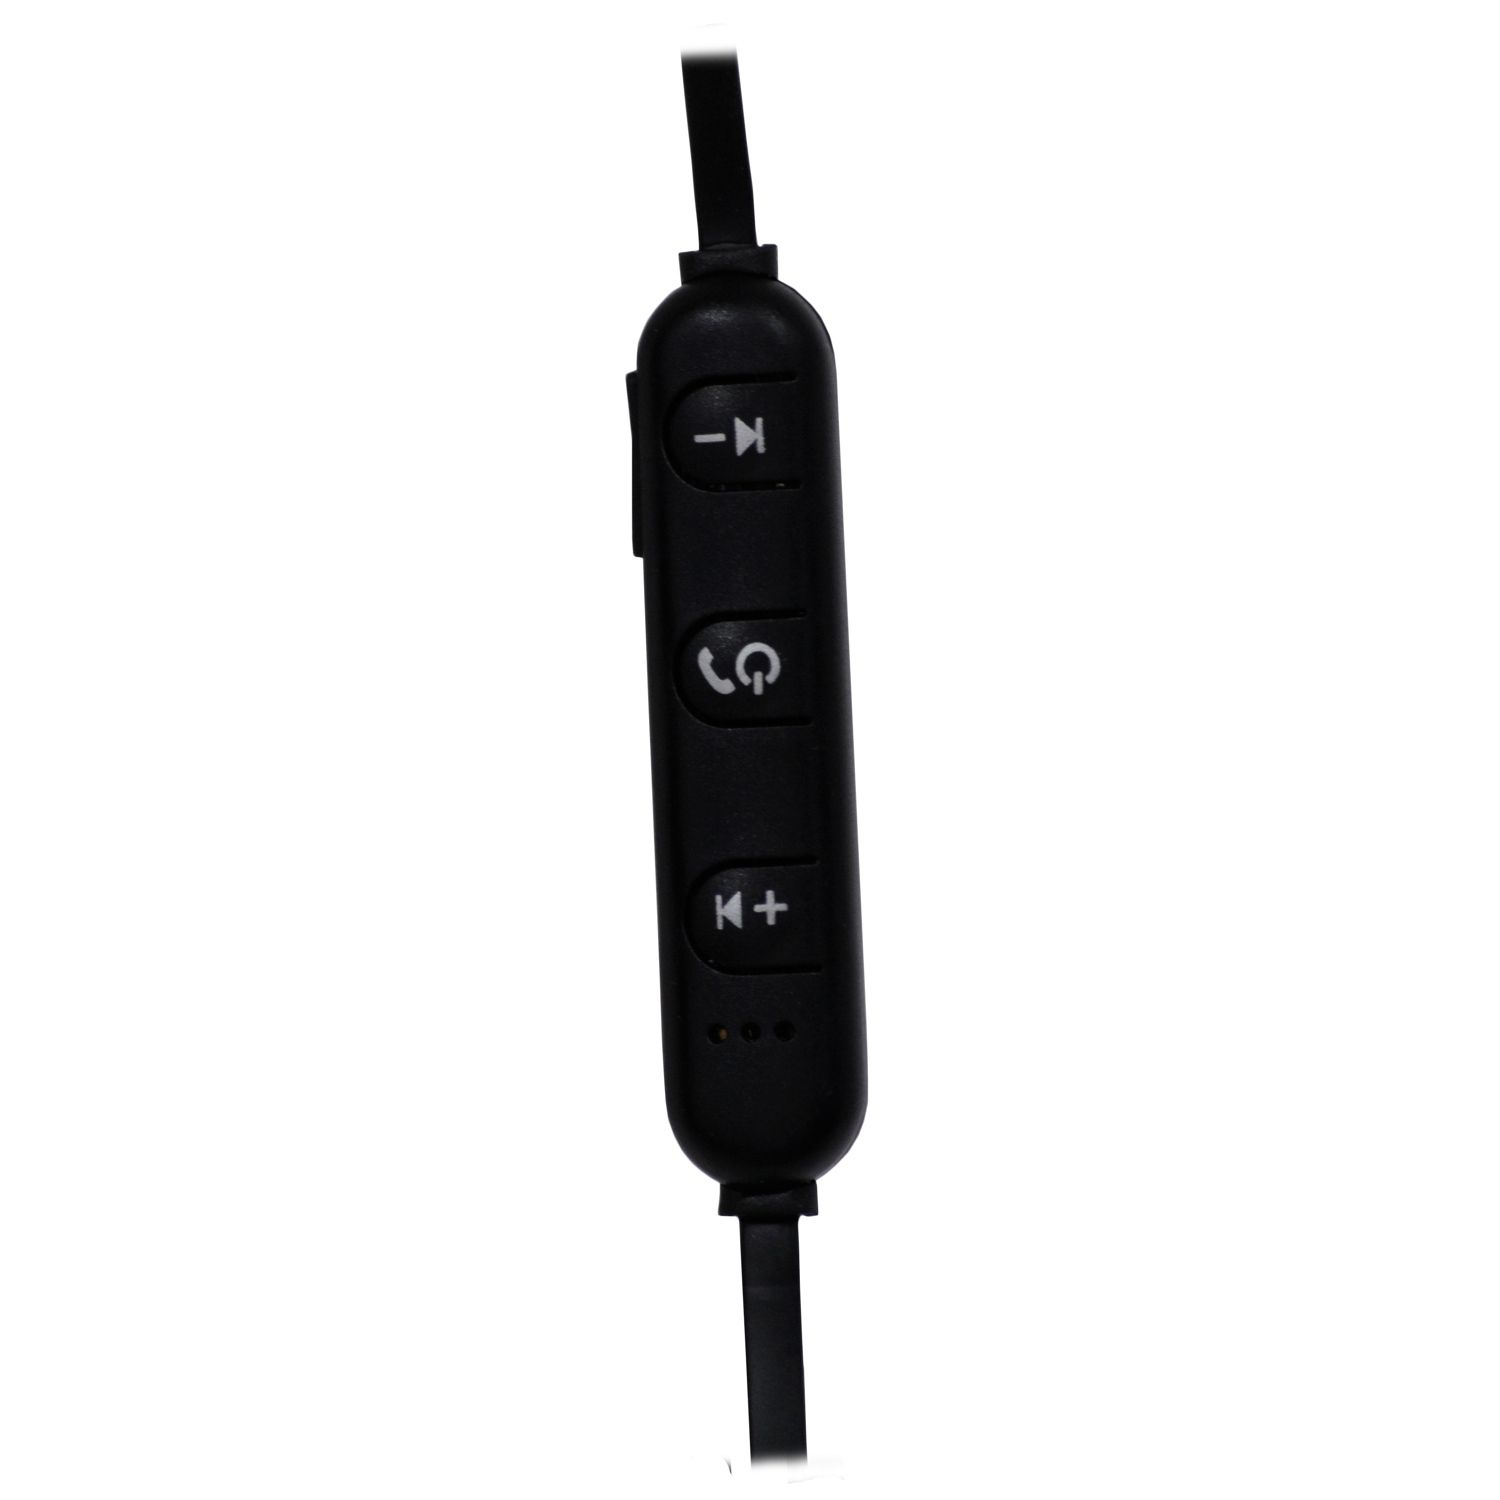 CASTI  Spacer, wireless, intraauriculare cu fir de legatura, pt smartphone, microfon pe fir, conectare prin Bluetooth 4.1, negru, 